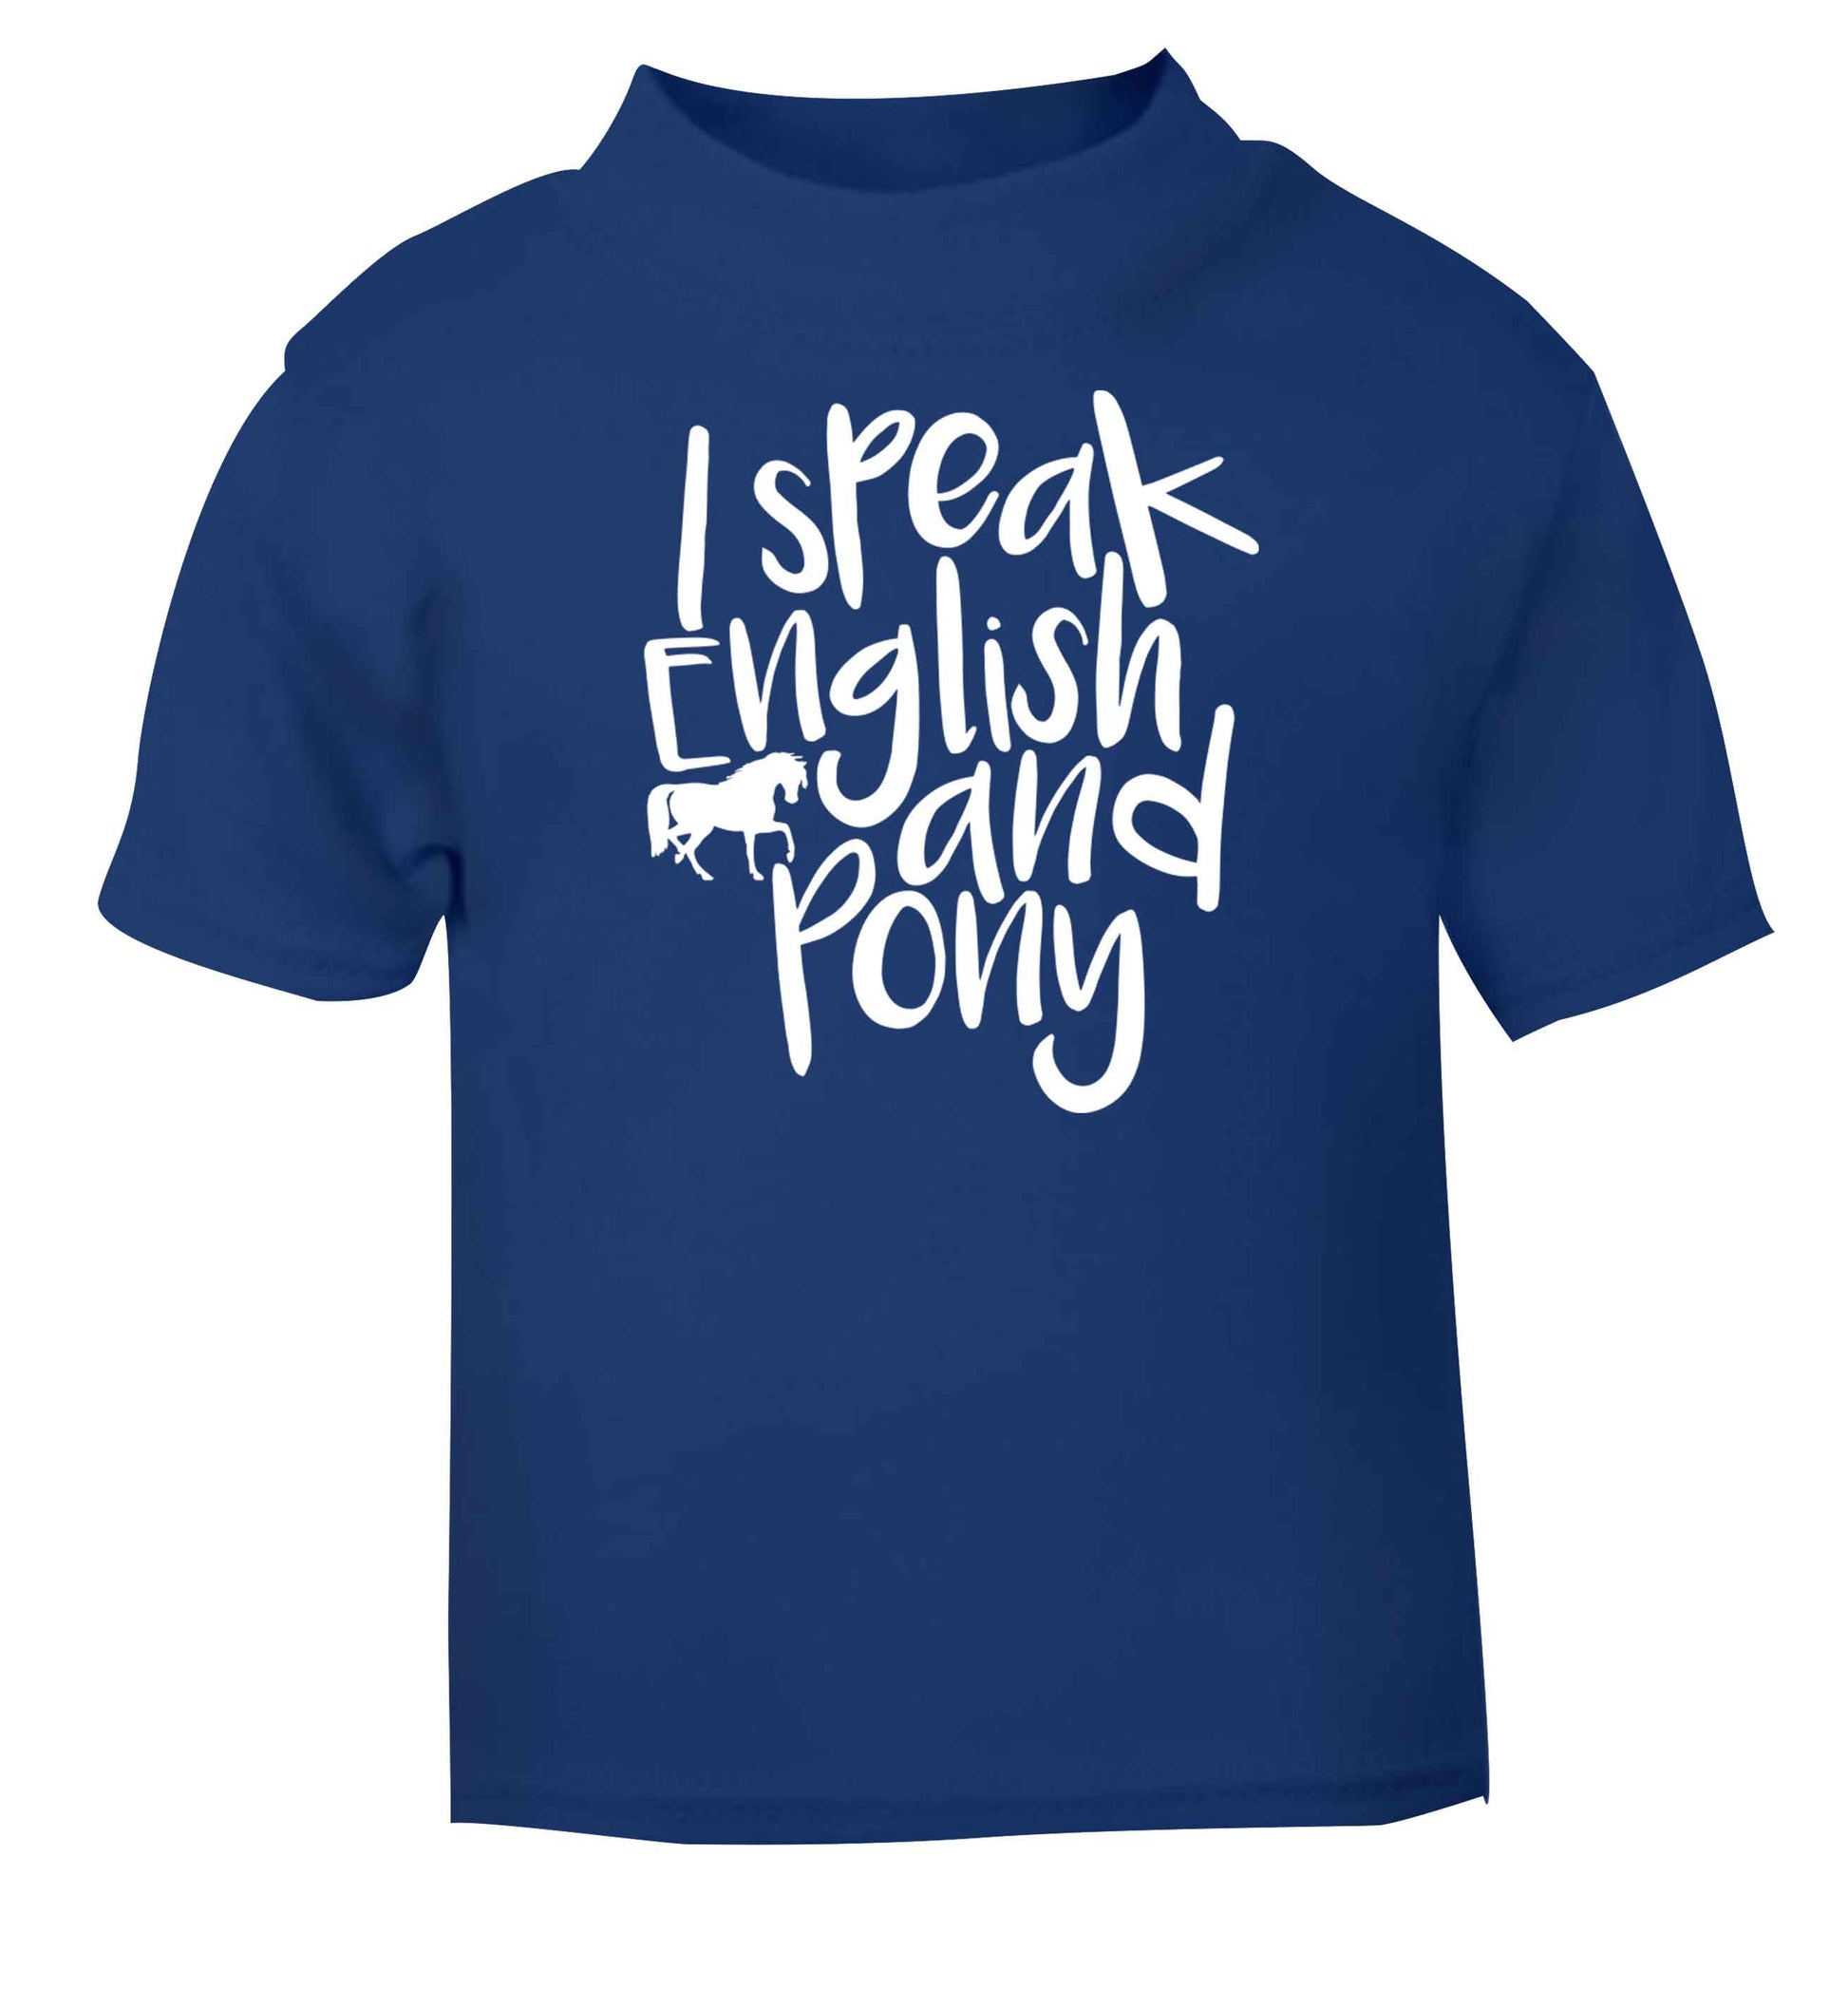 I speak English and pony blue baby toddler Tshirt 2 Years